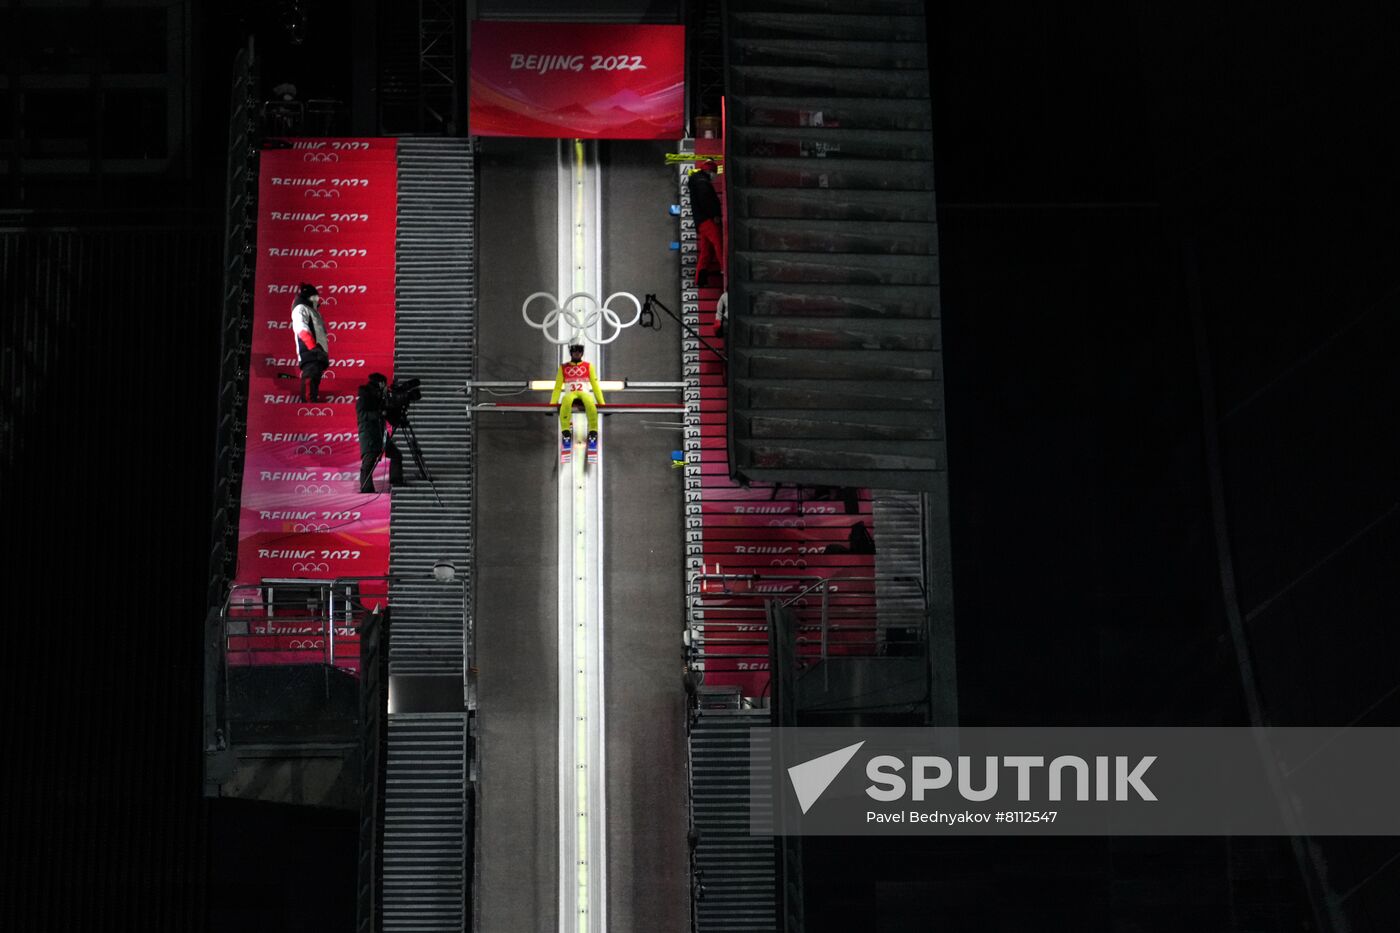 China Olympics 2022 Ski Jumping Men